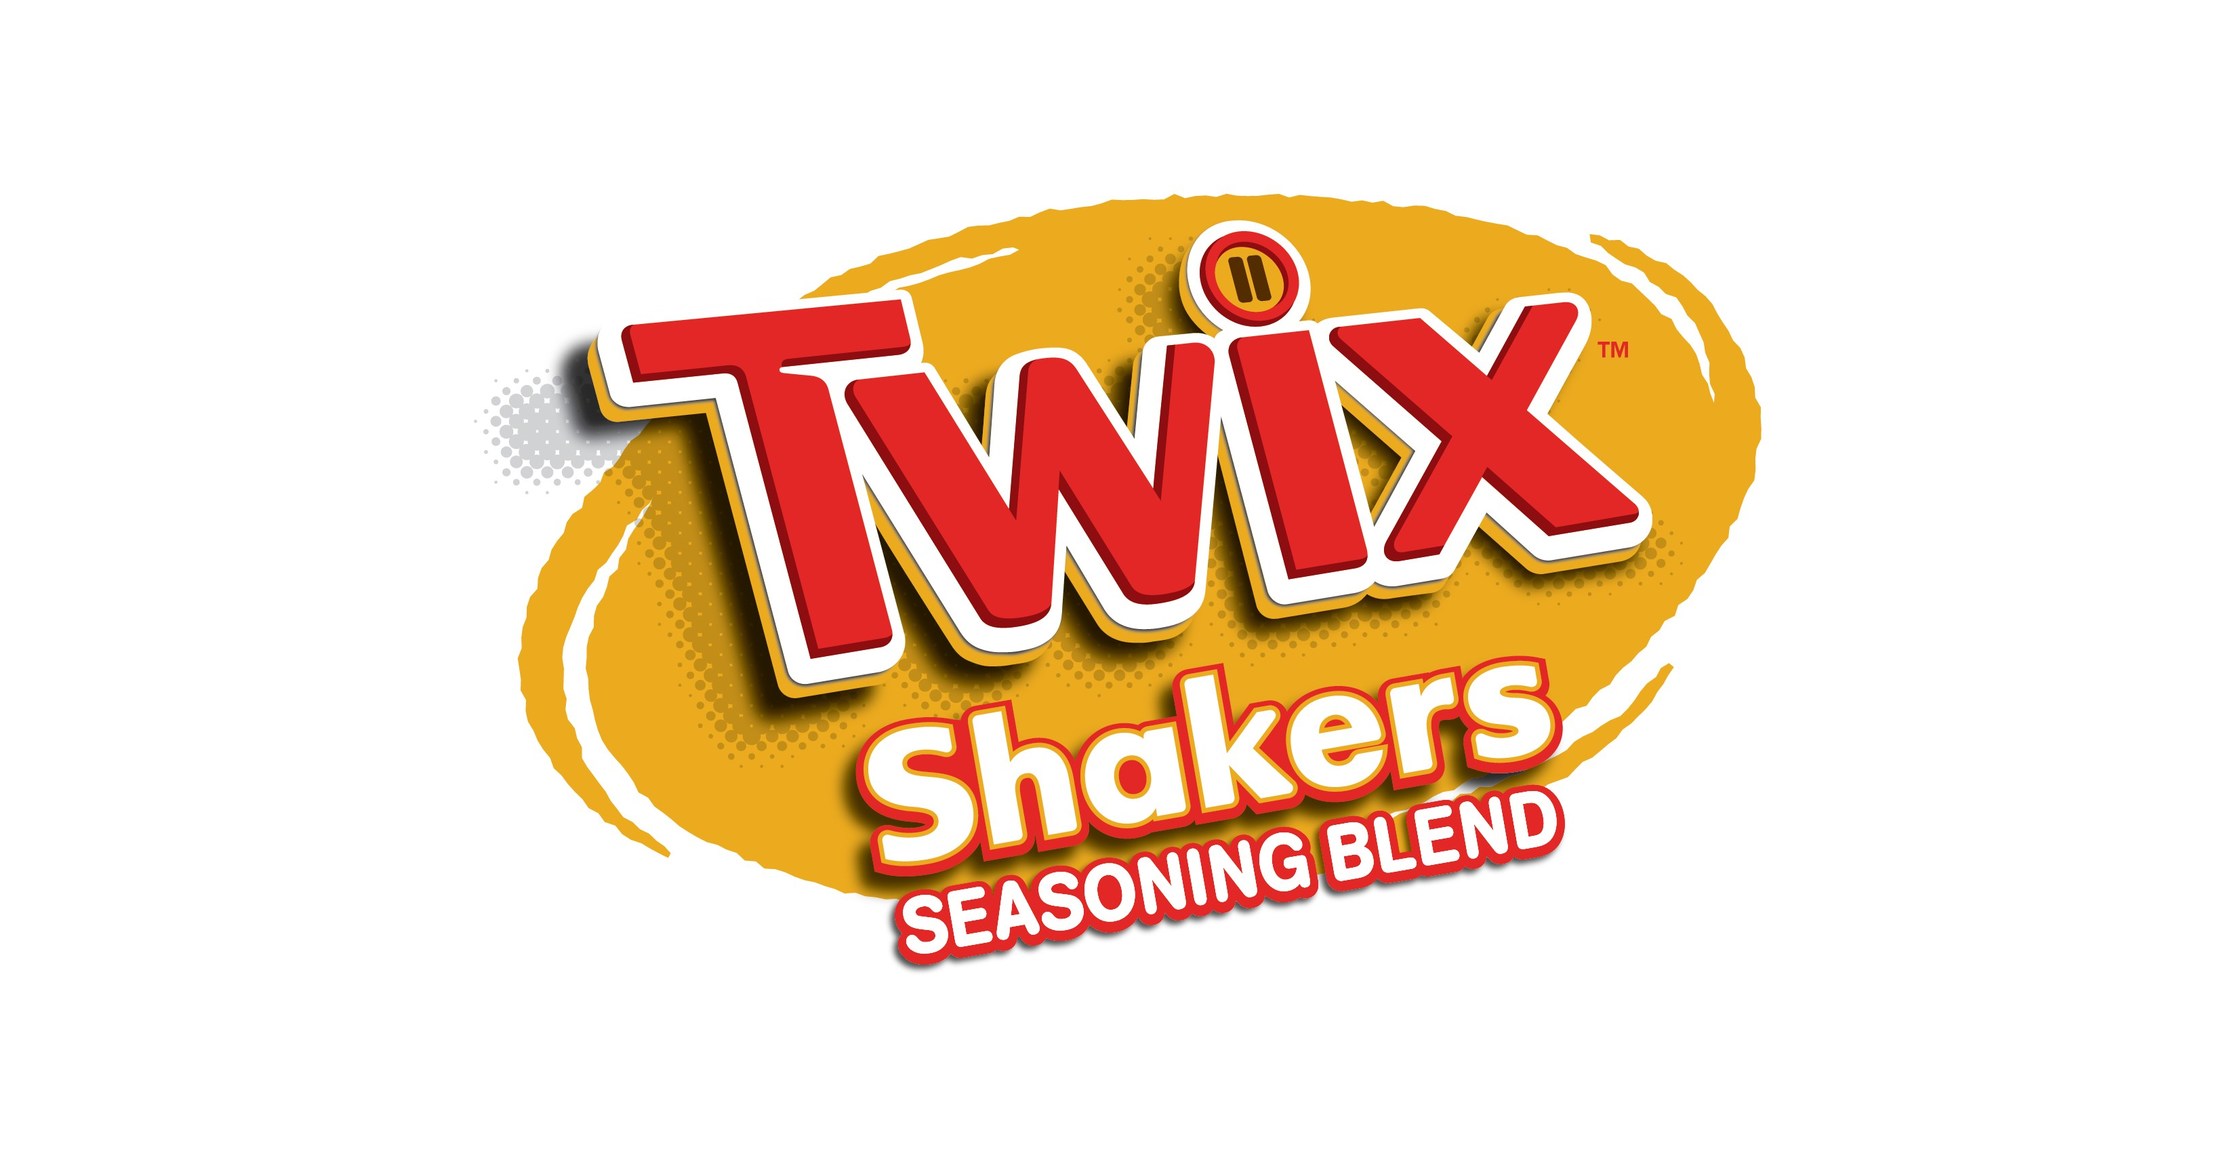 https://mma.prnewswire.com/media/1603356/Twix_Shakers_Logo.jpg?p=facebook